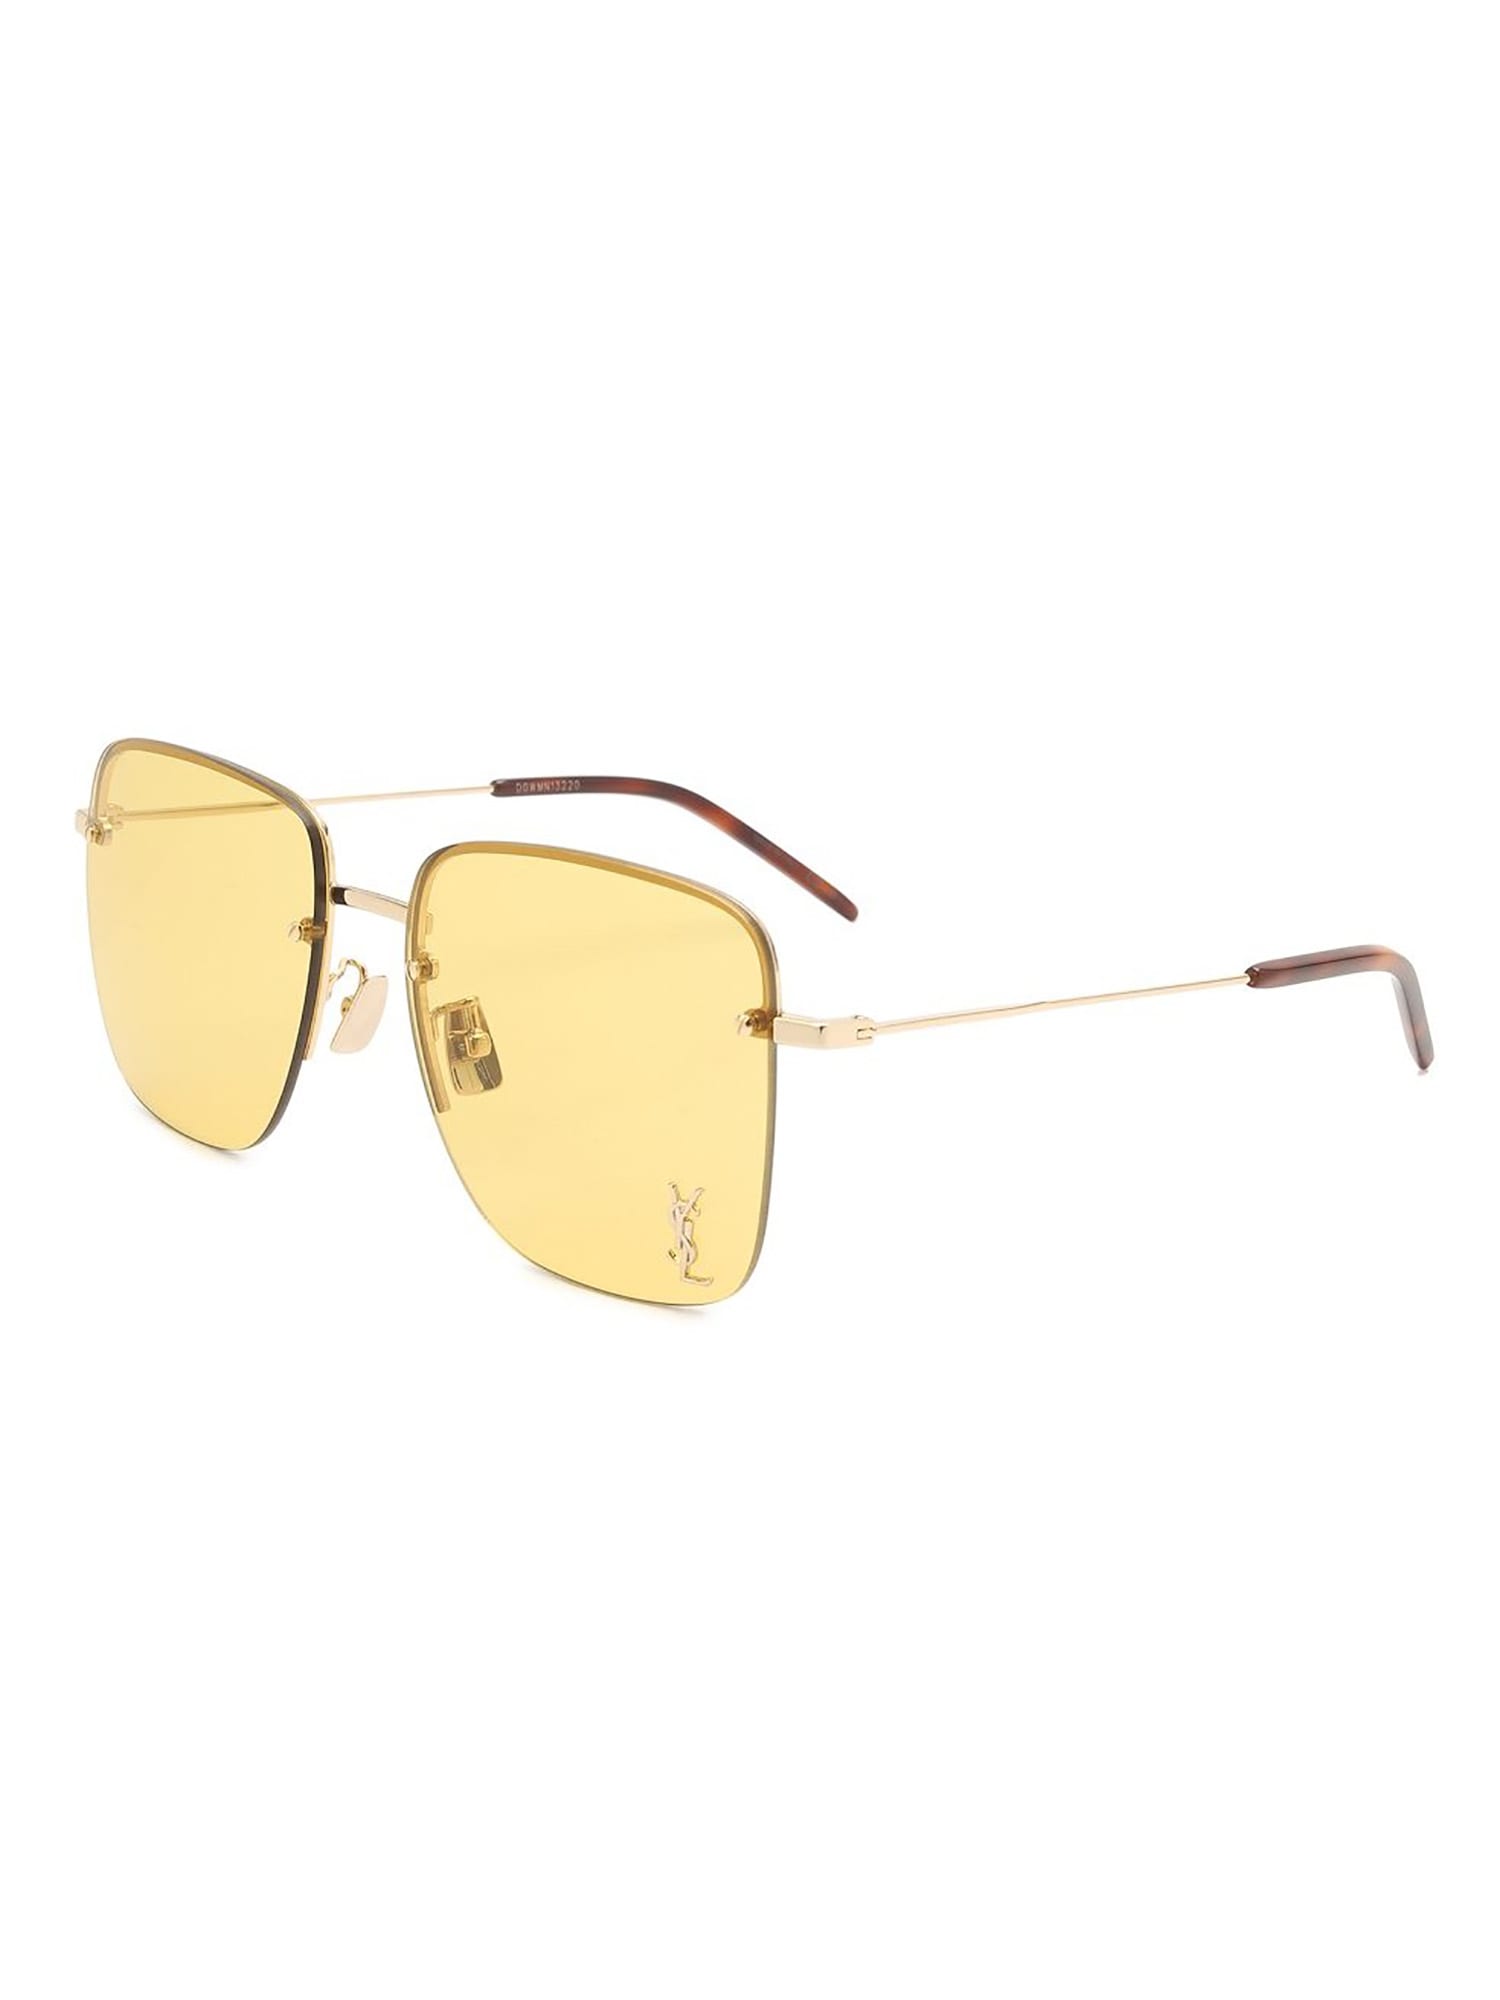 Saint Laurent Eyewear SL 312 M Sunglasses